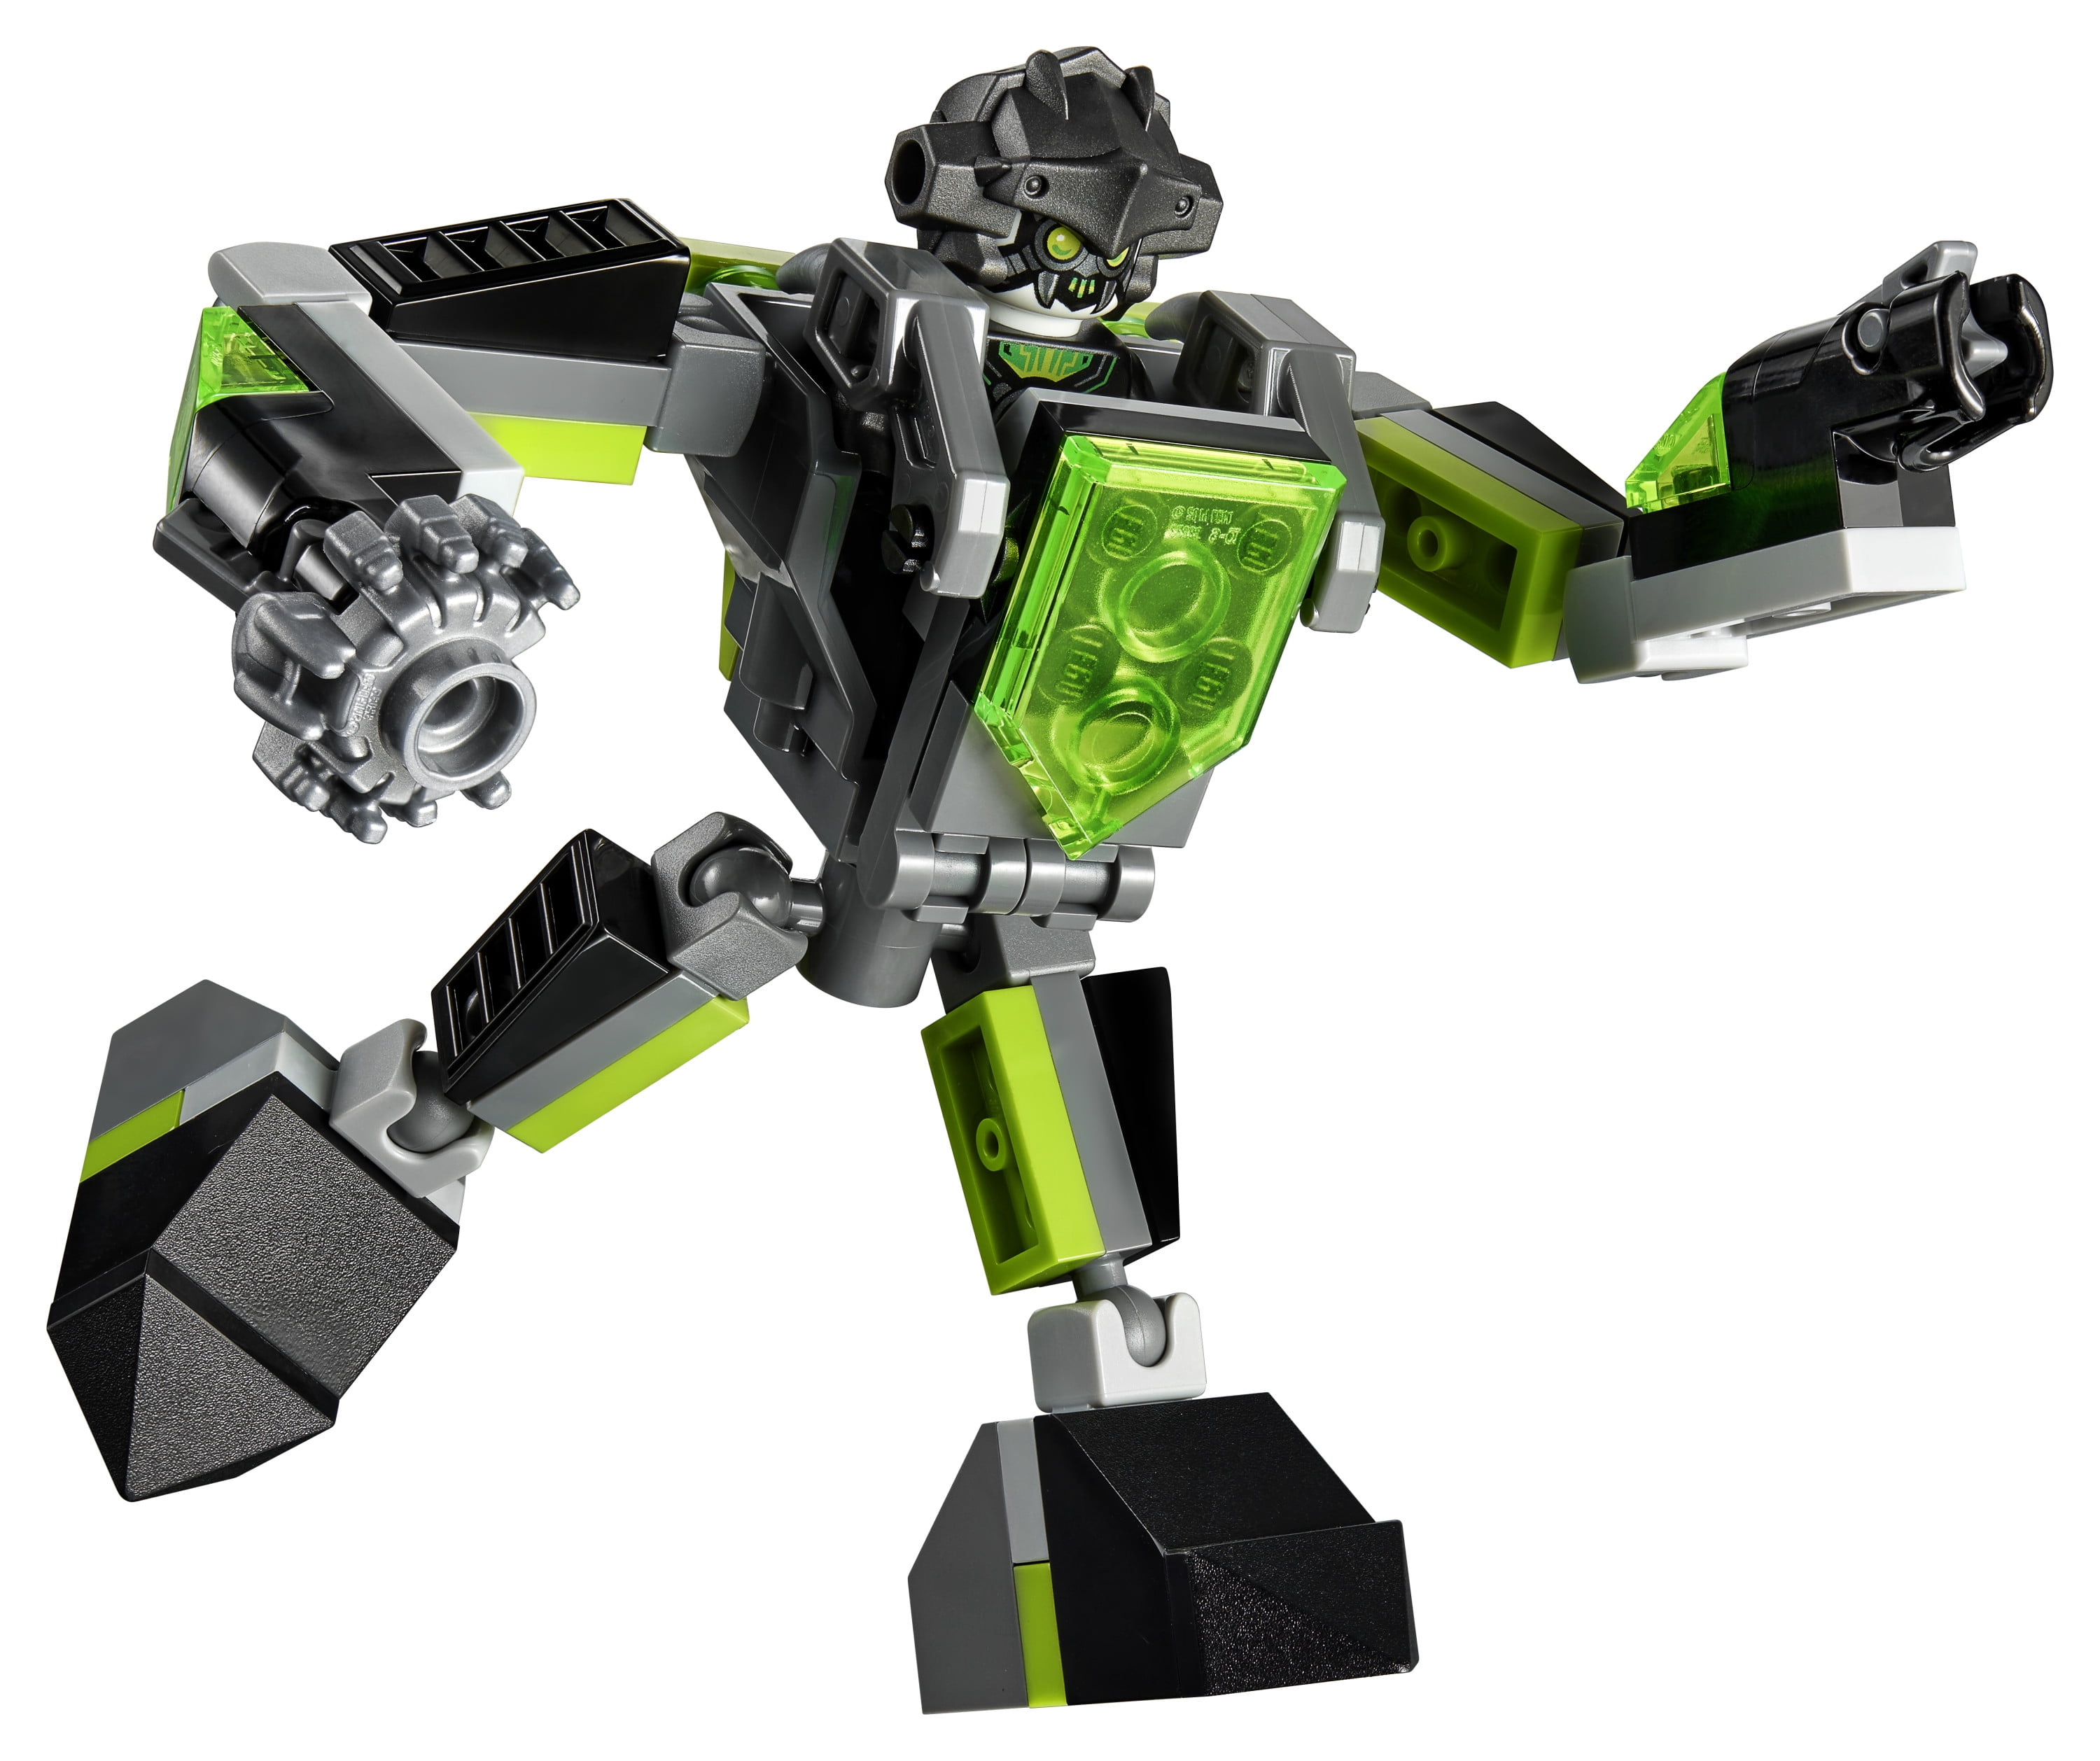 Monica Mistillid Grønland LEGO Nexo Knights Berserker Bomber 72003 (369 Pieces) - Walmart.com